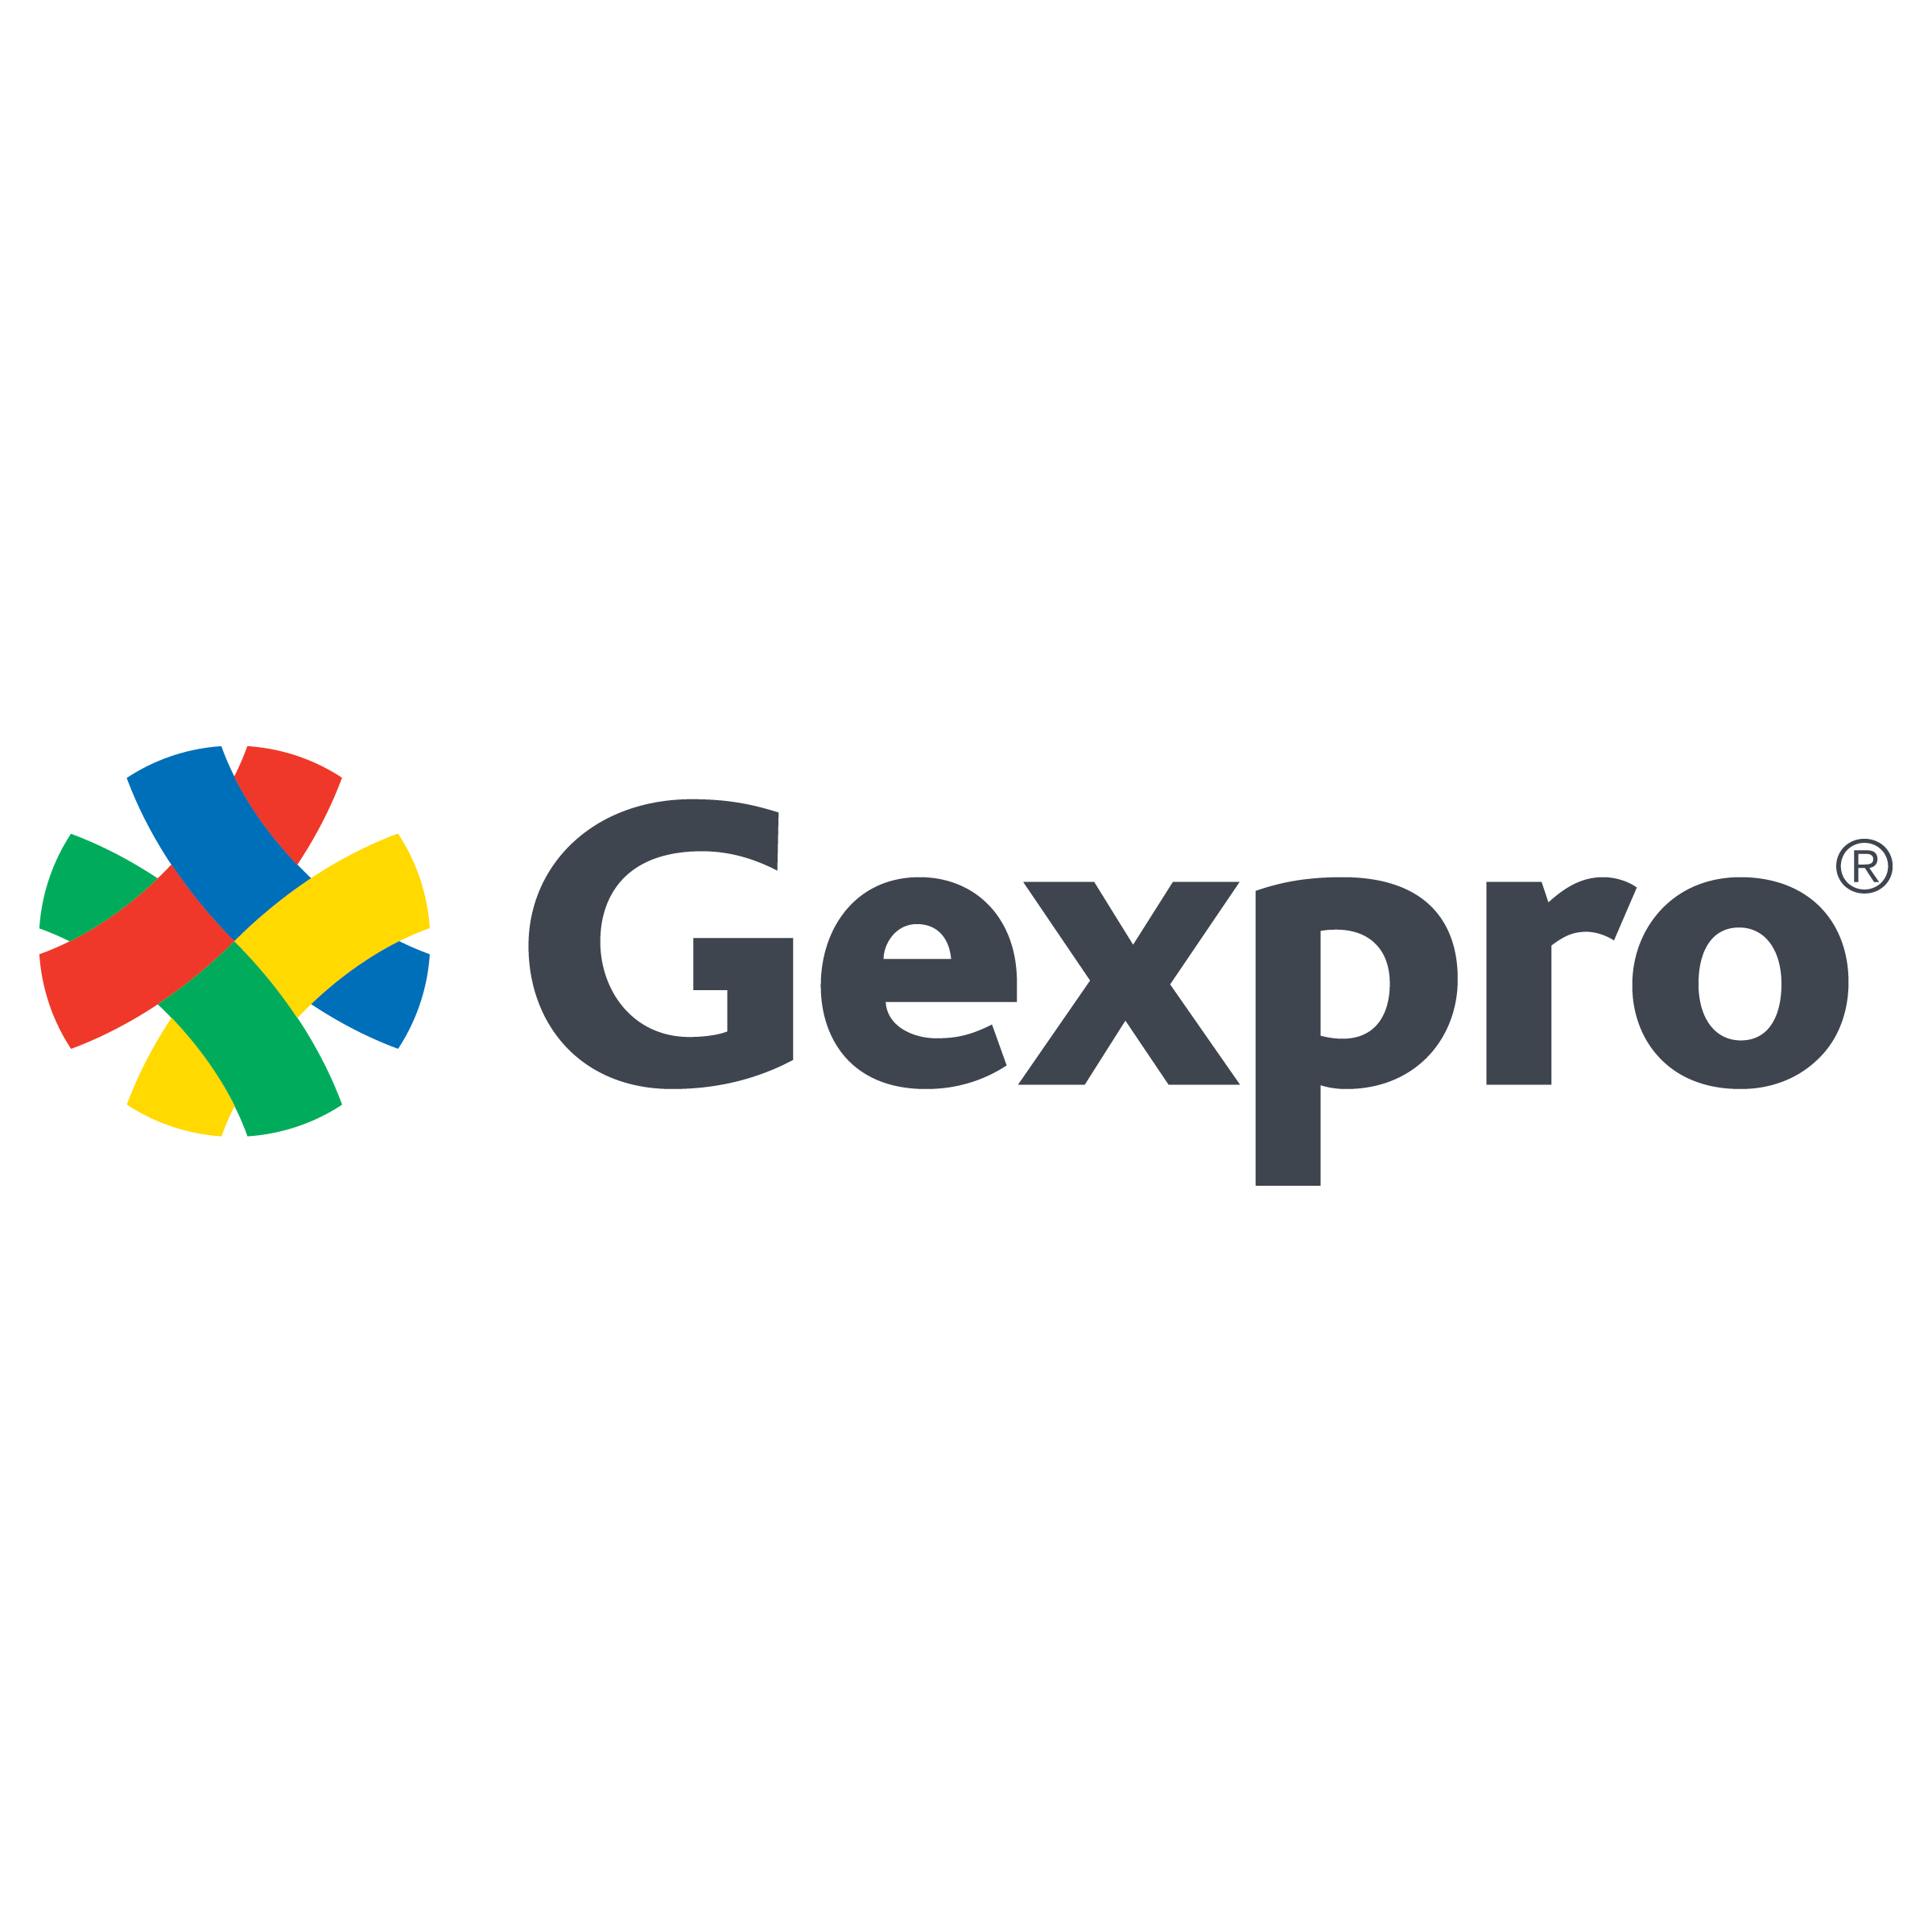 Gexpro